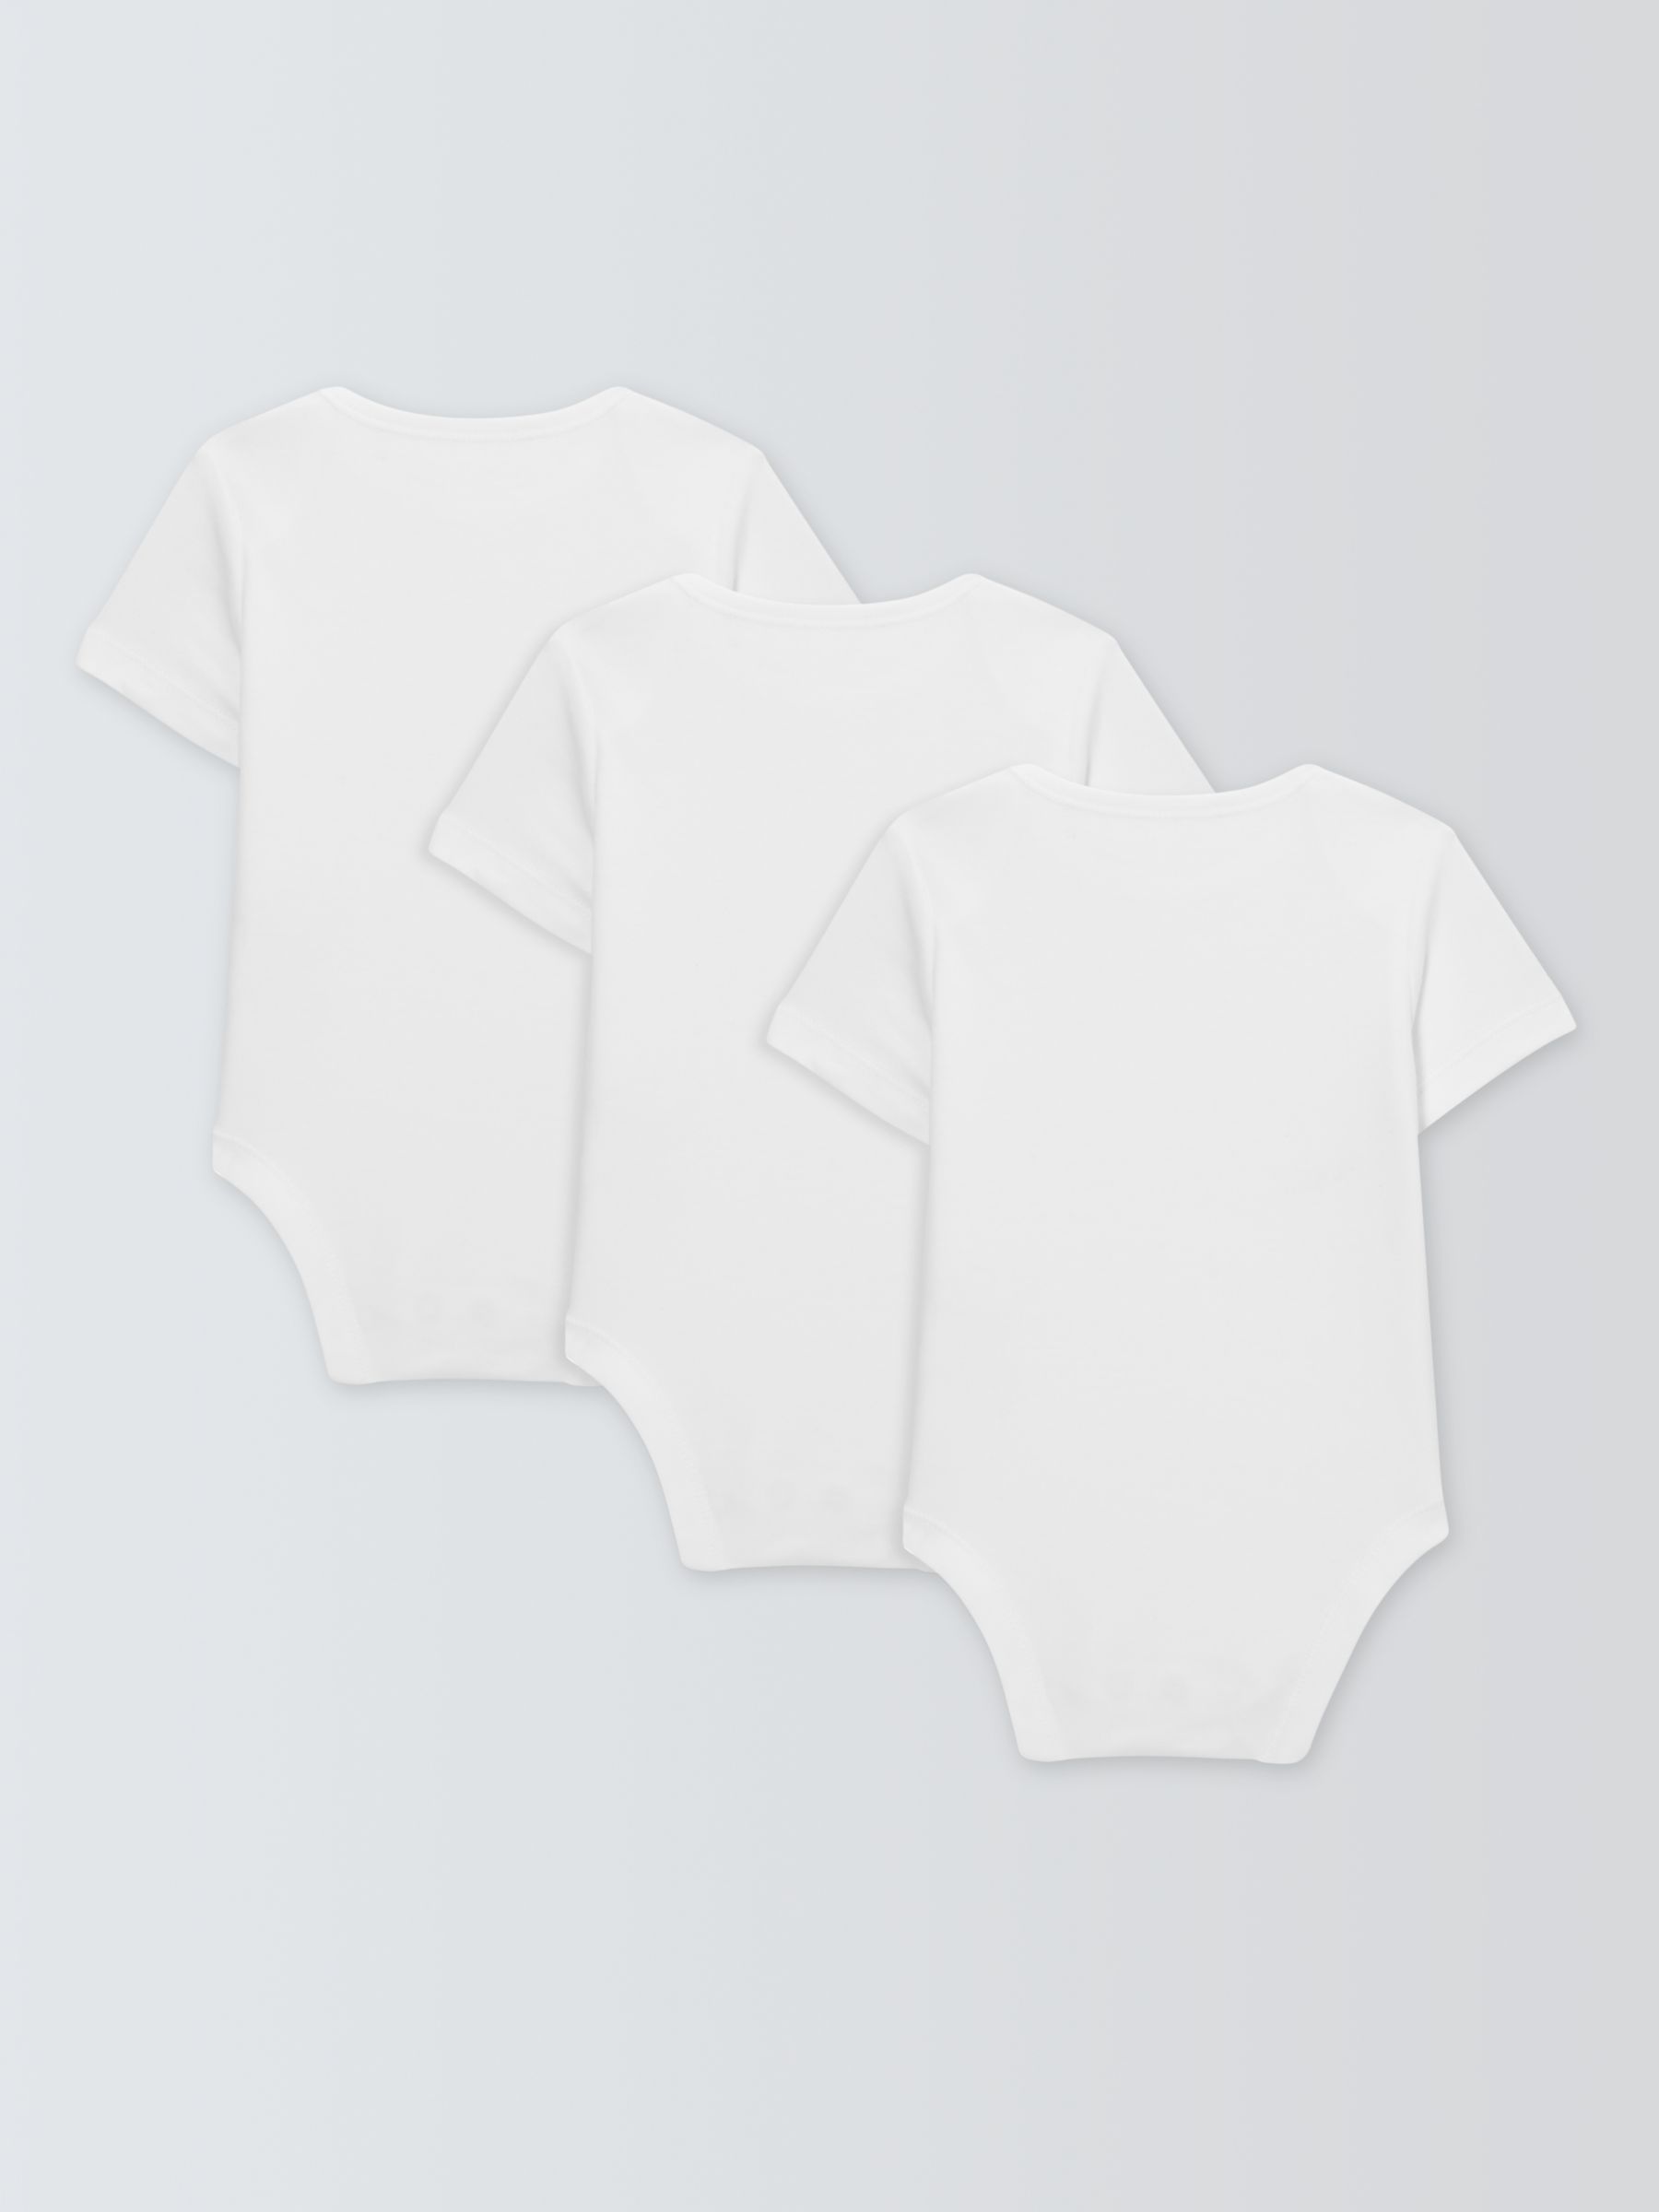 John Lewis Baby Pima Cotton Short Sleeve Bodysuit, Pack of 3, White, 9-12 months